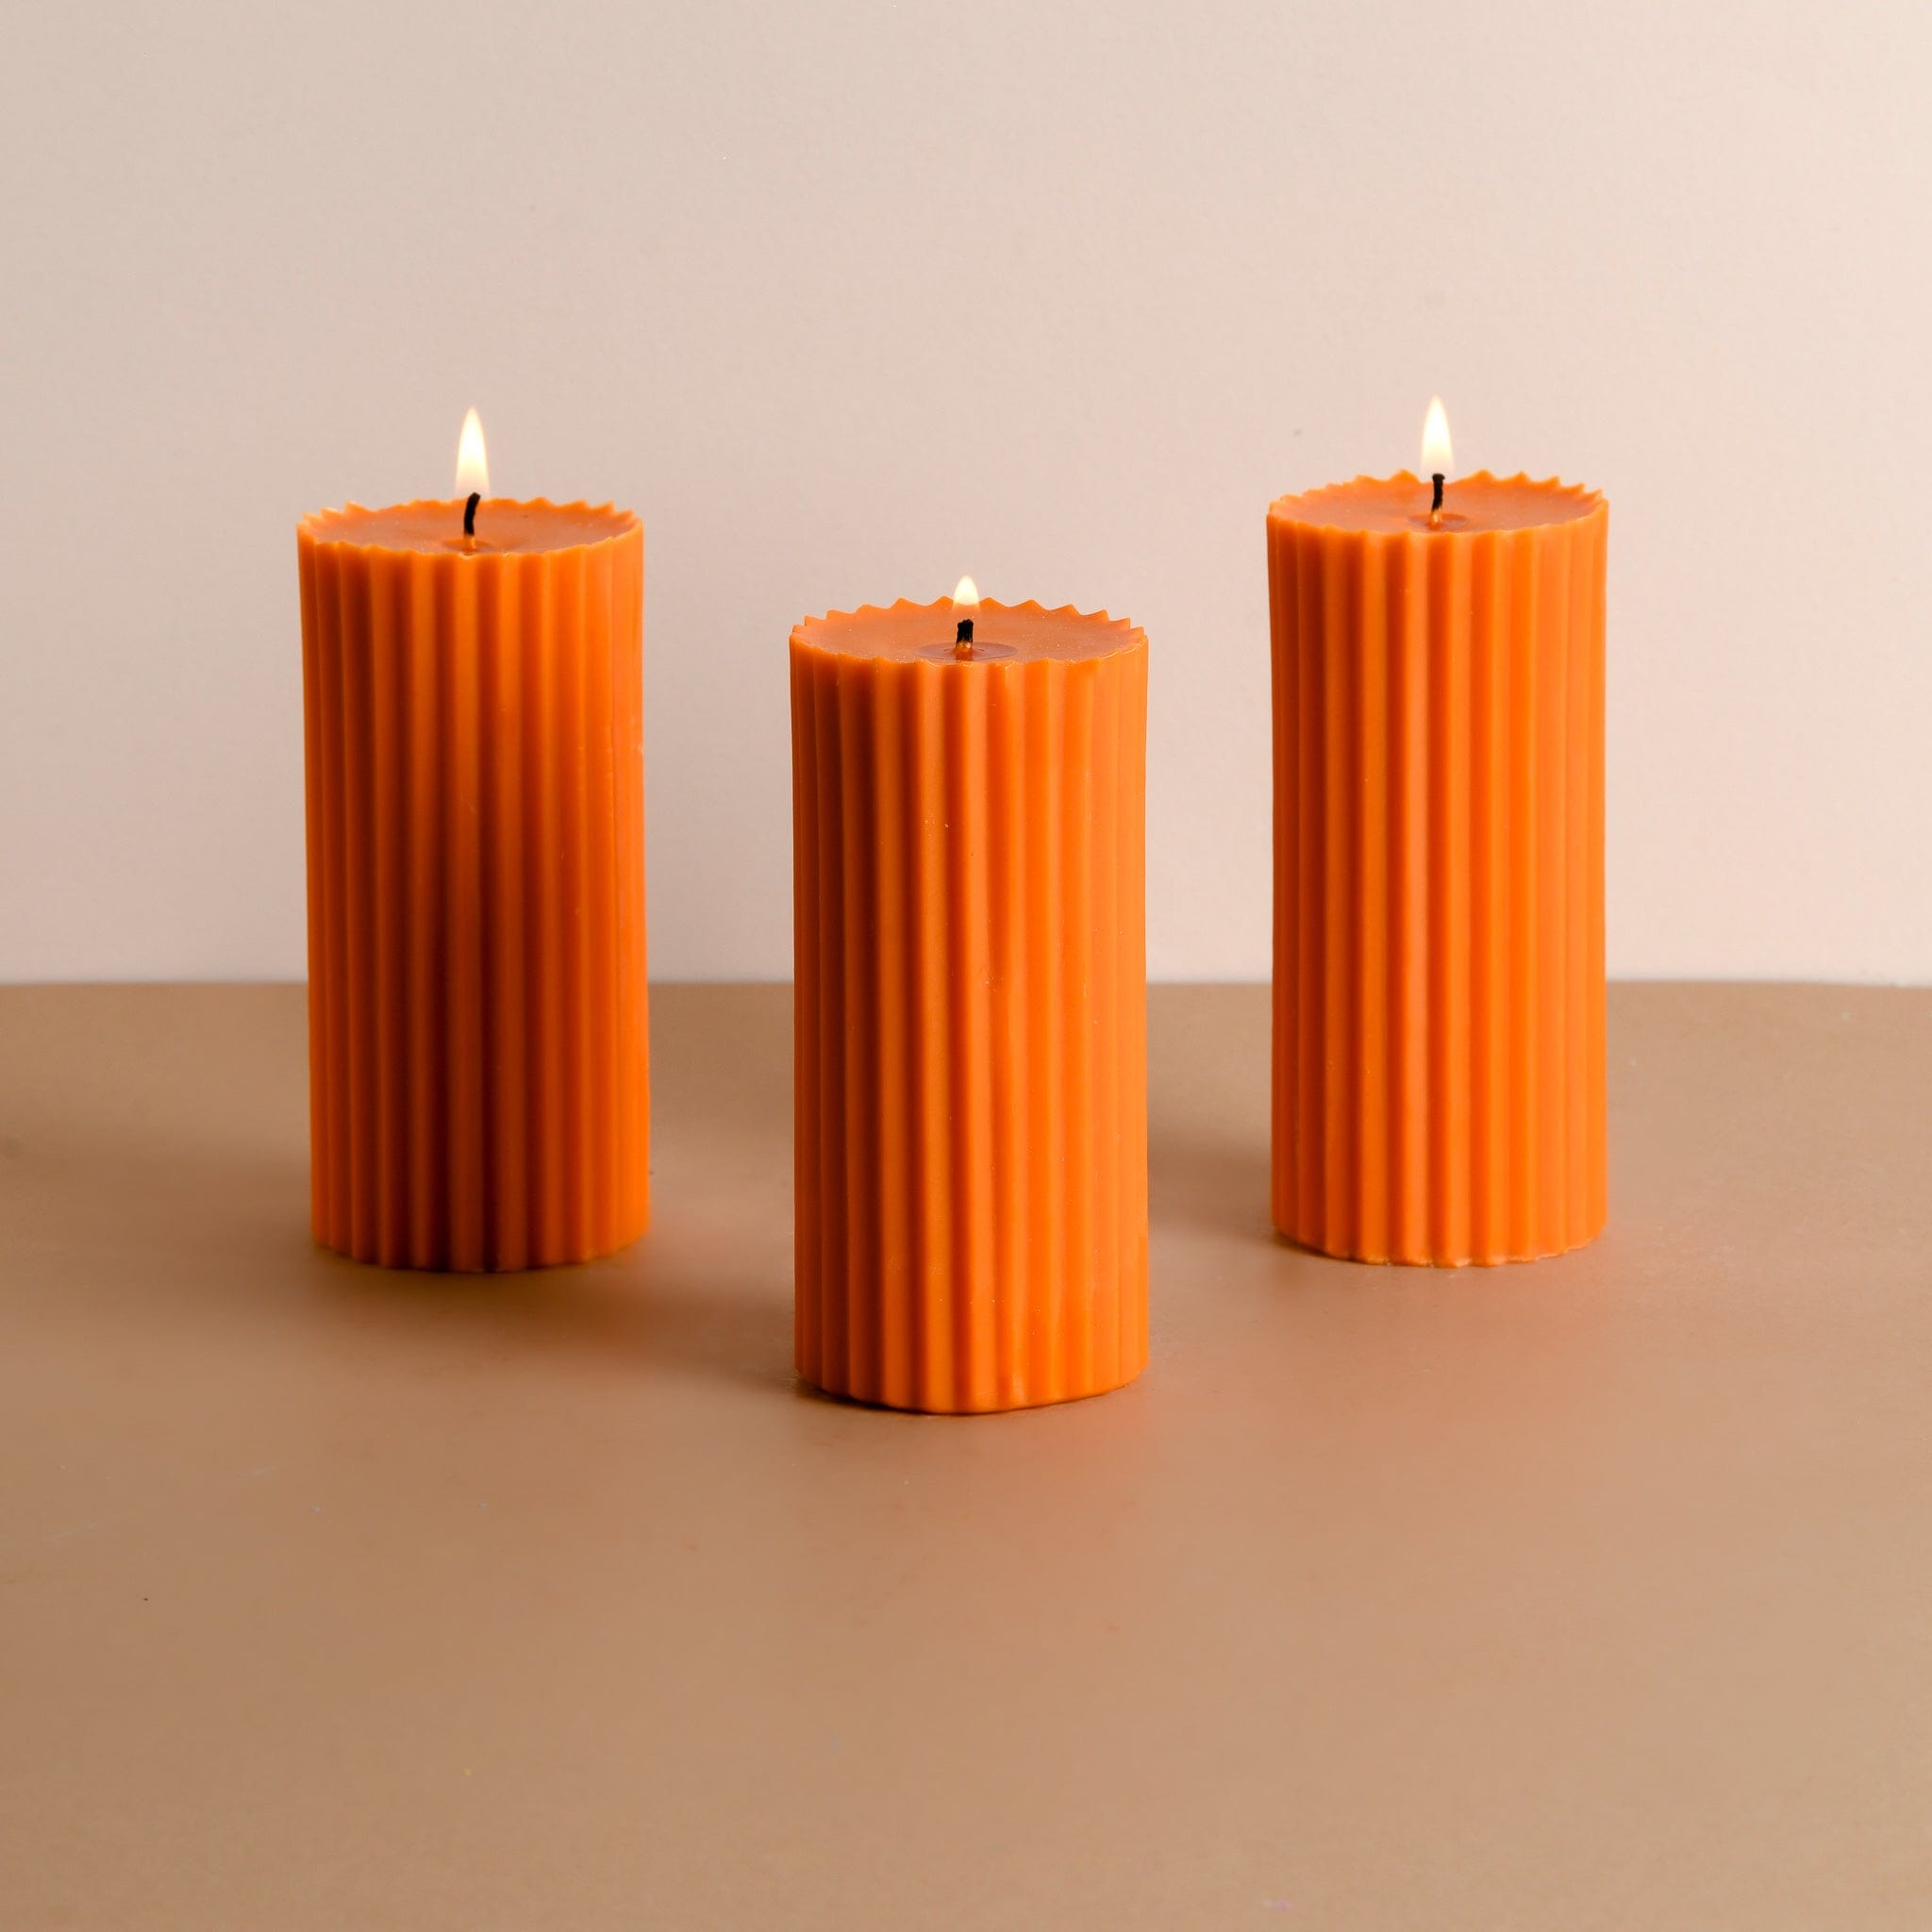 Combo of 3 Sunset Orange 'Belief' Candles - Vanilla Sunshine Scented